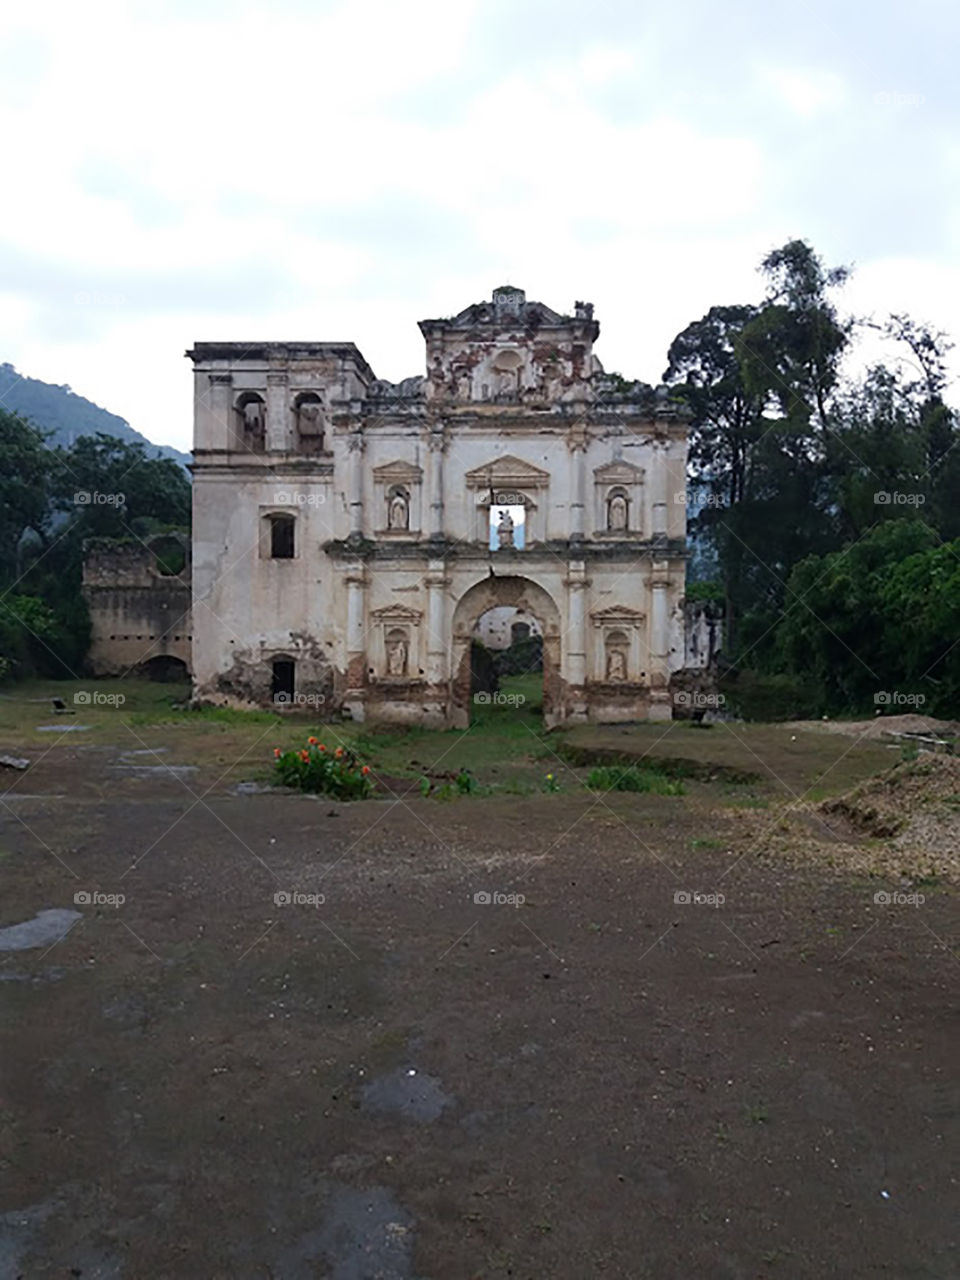 Antigua Guatemala and its beautiful buildings